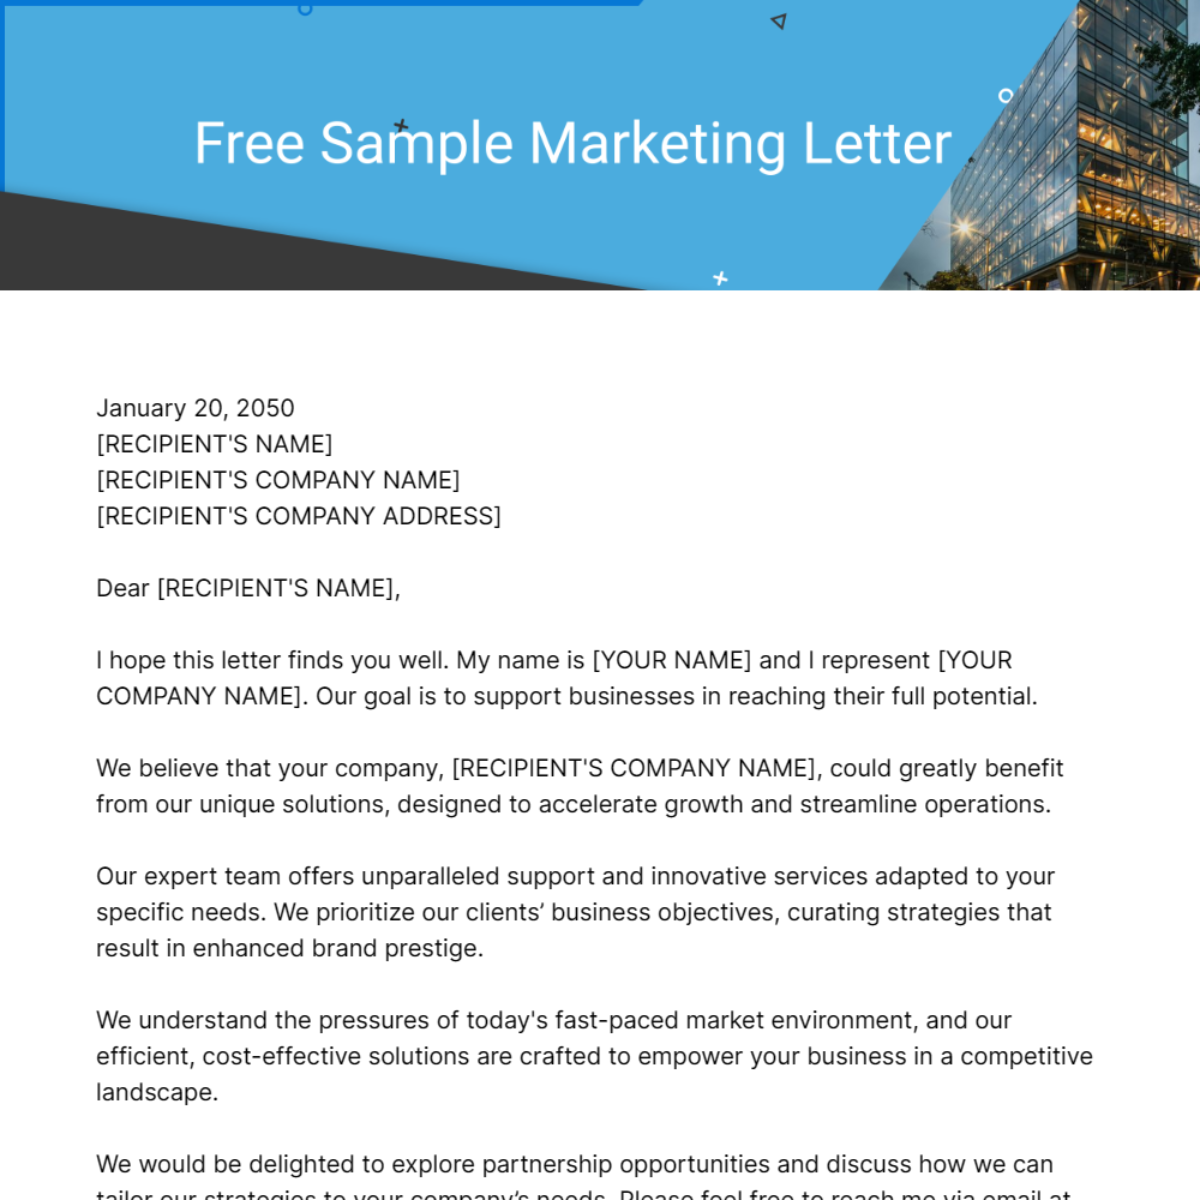 Sample Marketing Letter Template